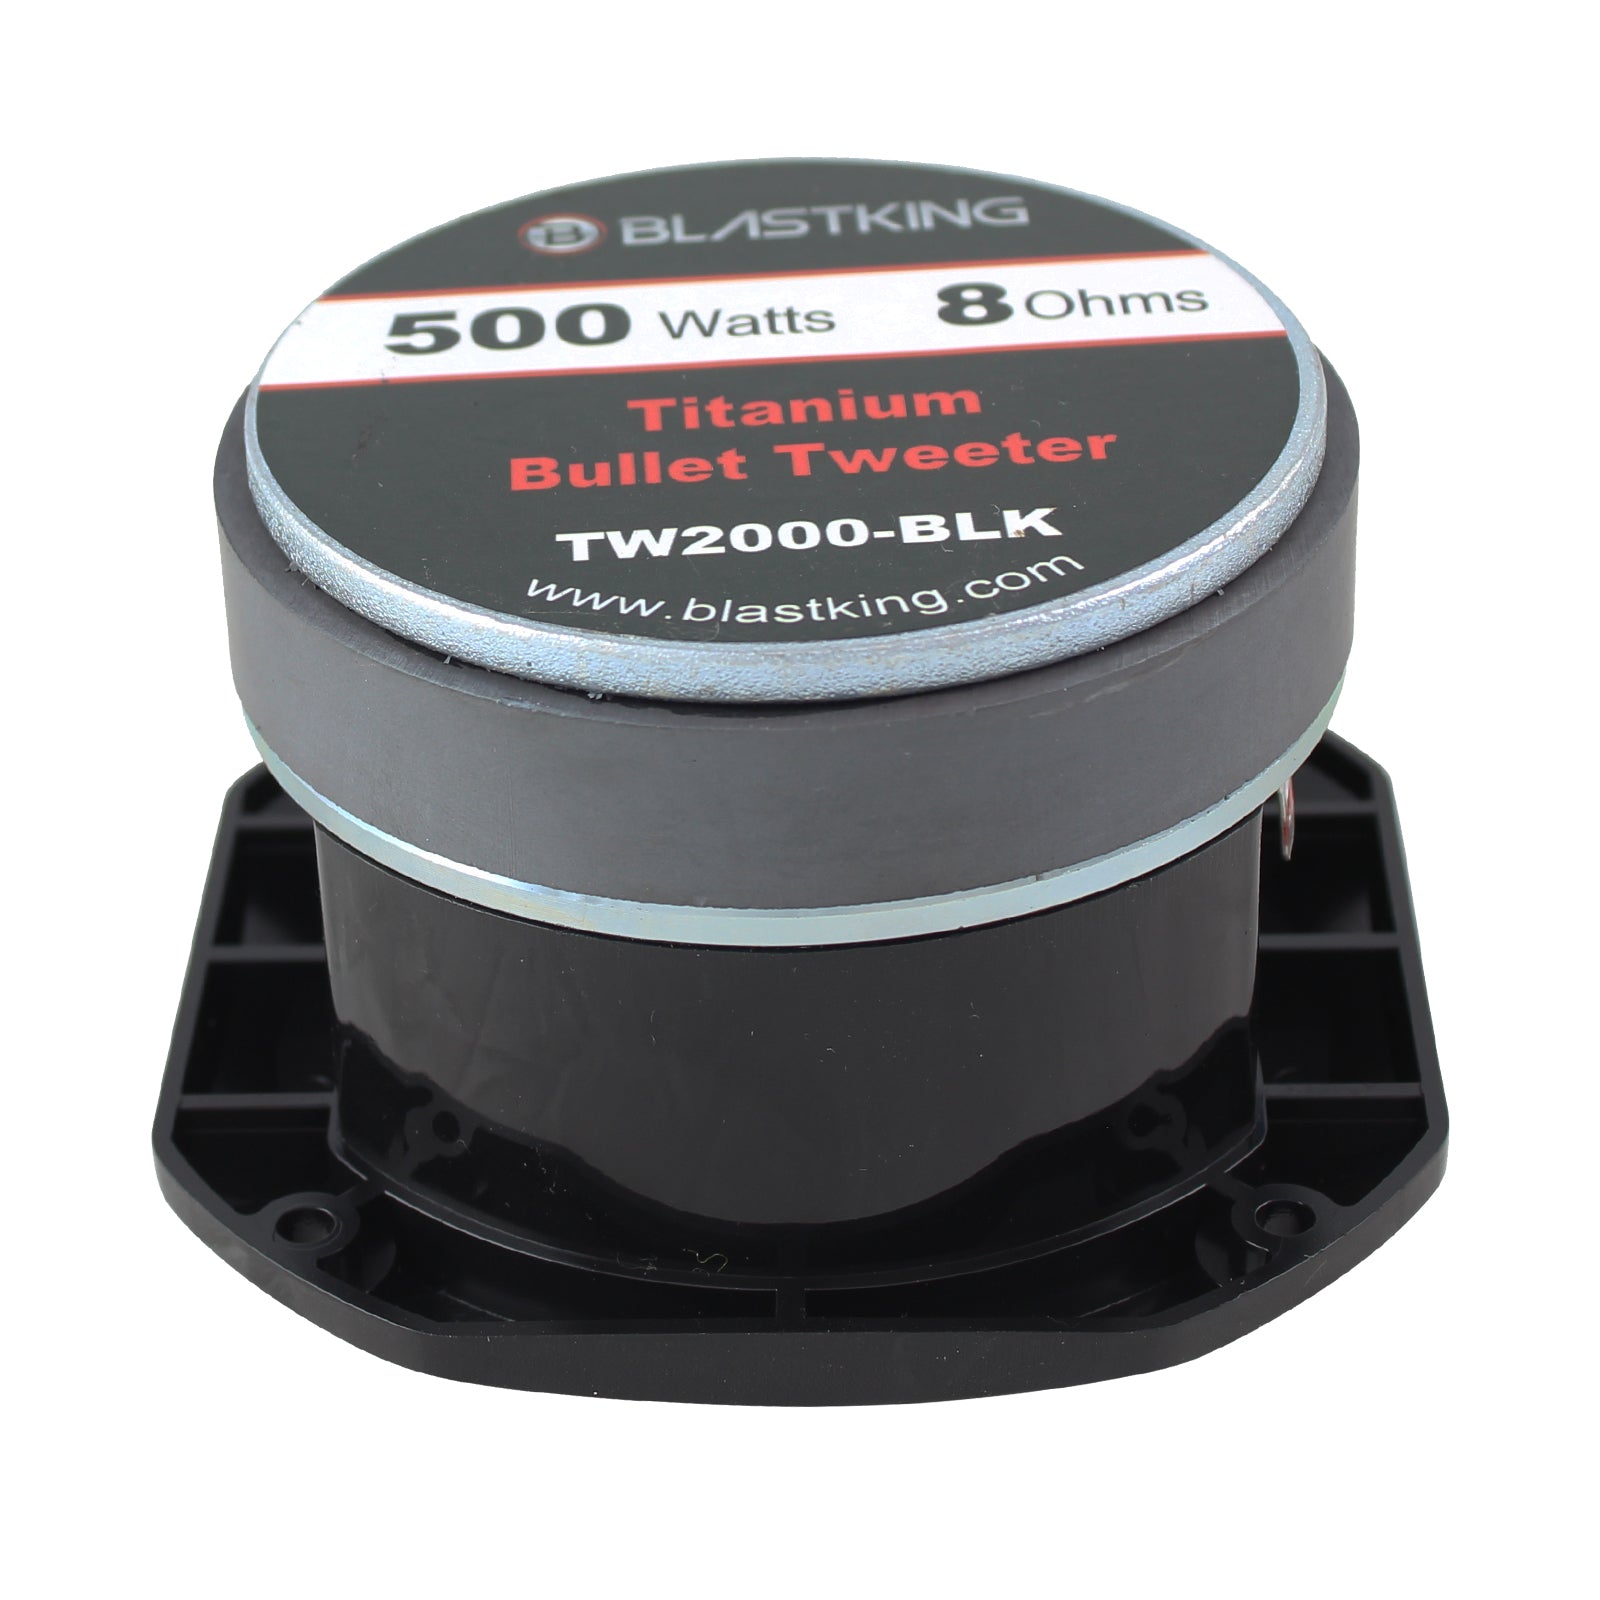 Blastking TW2000-BLK 500 Watts 4x4 inch 1.5 inch VC Titanium Bullet Tweeter Black